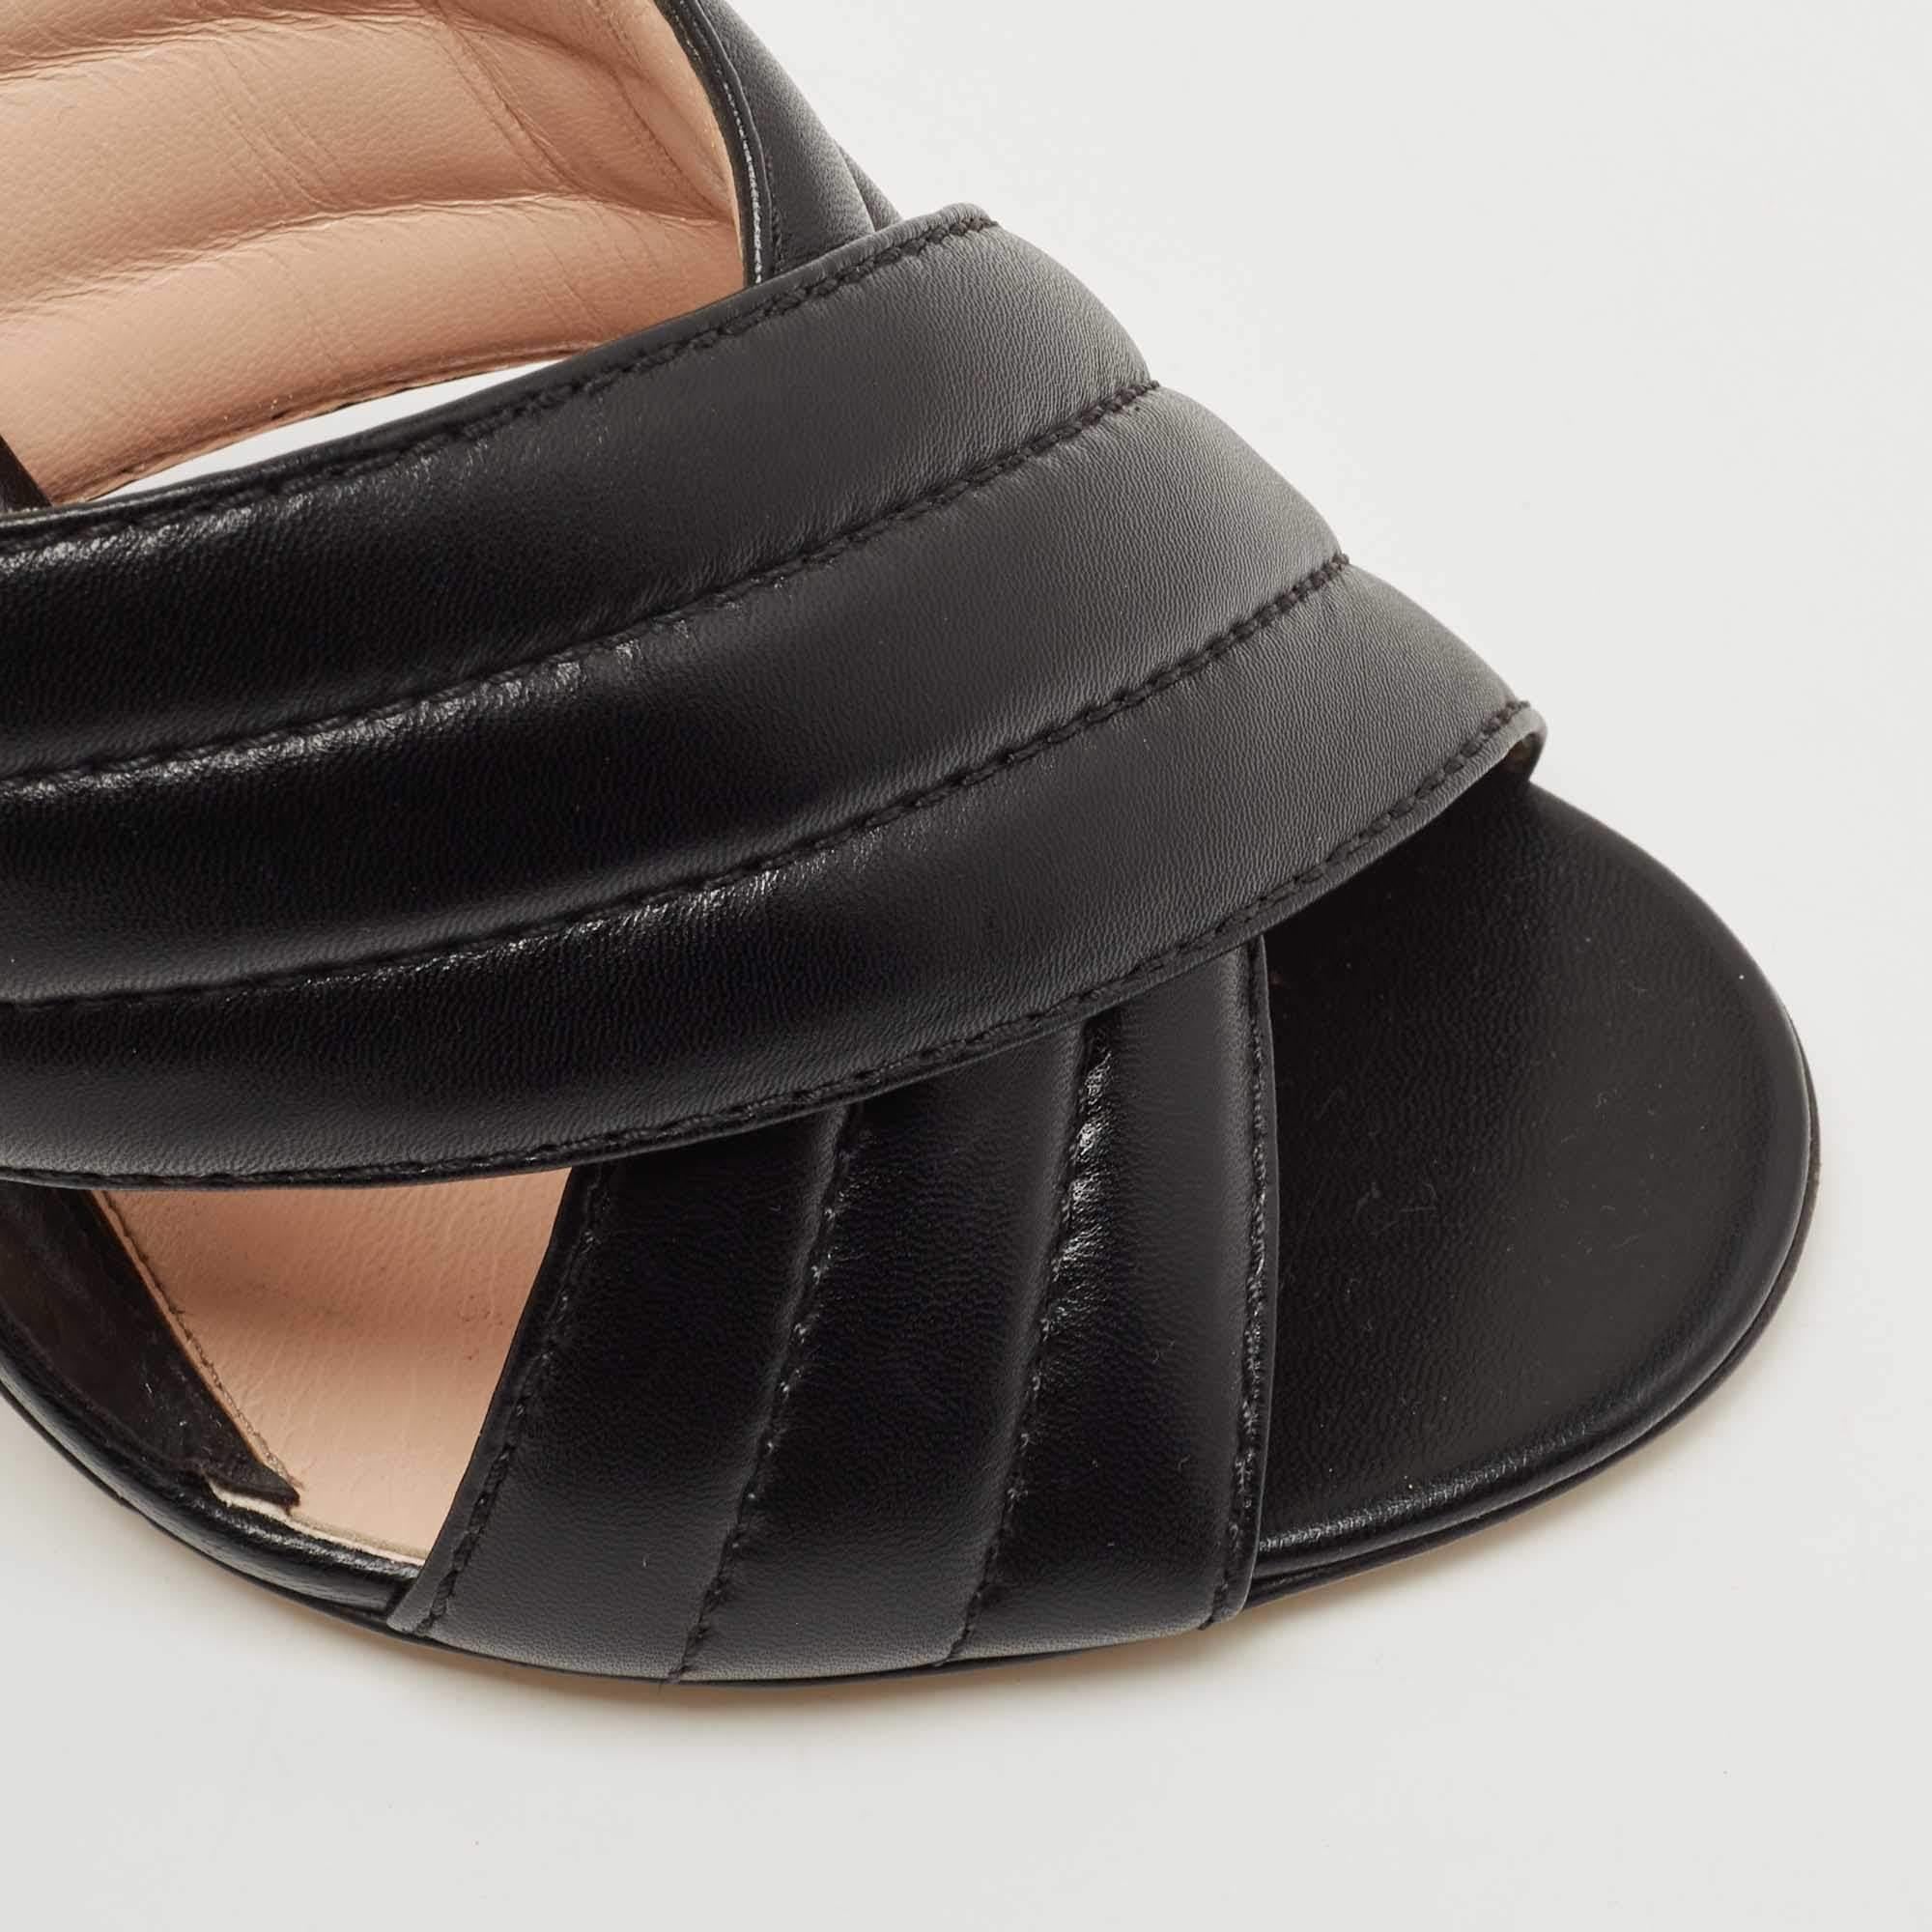 Gucci Black Leather Webby Slide Sandals Size 38.5 3